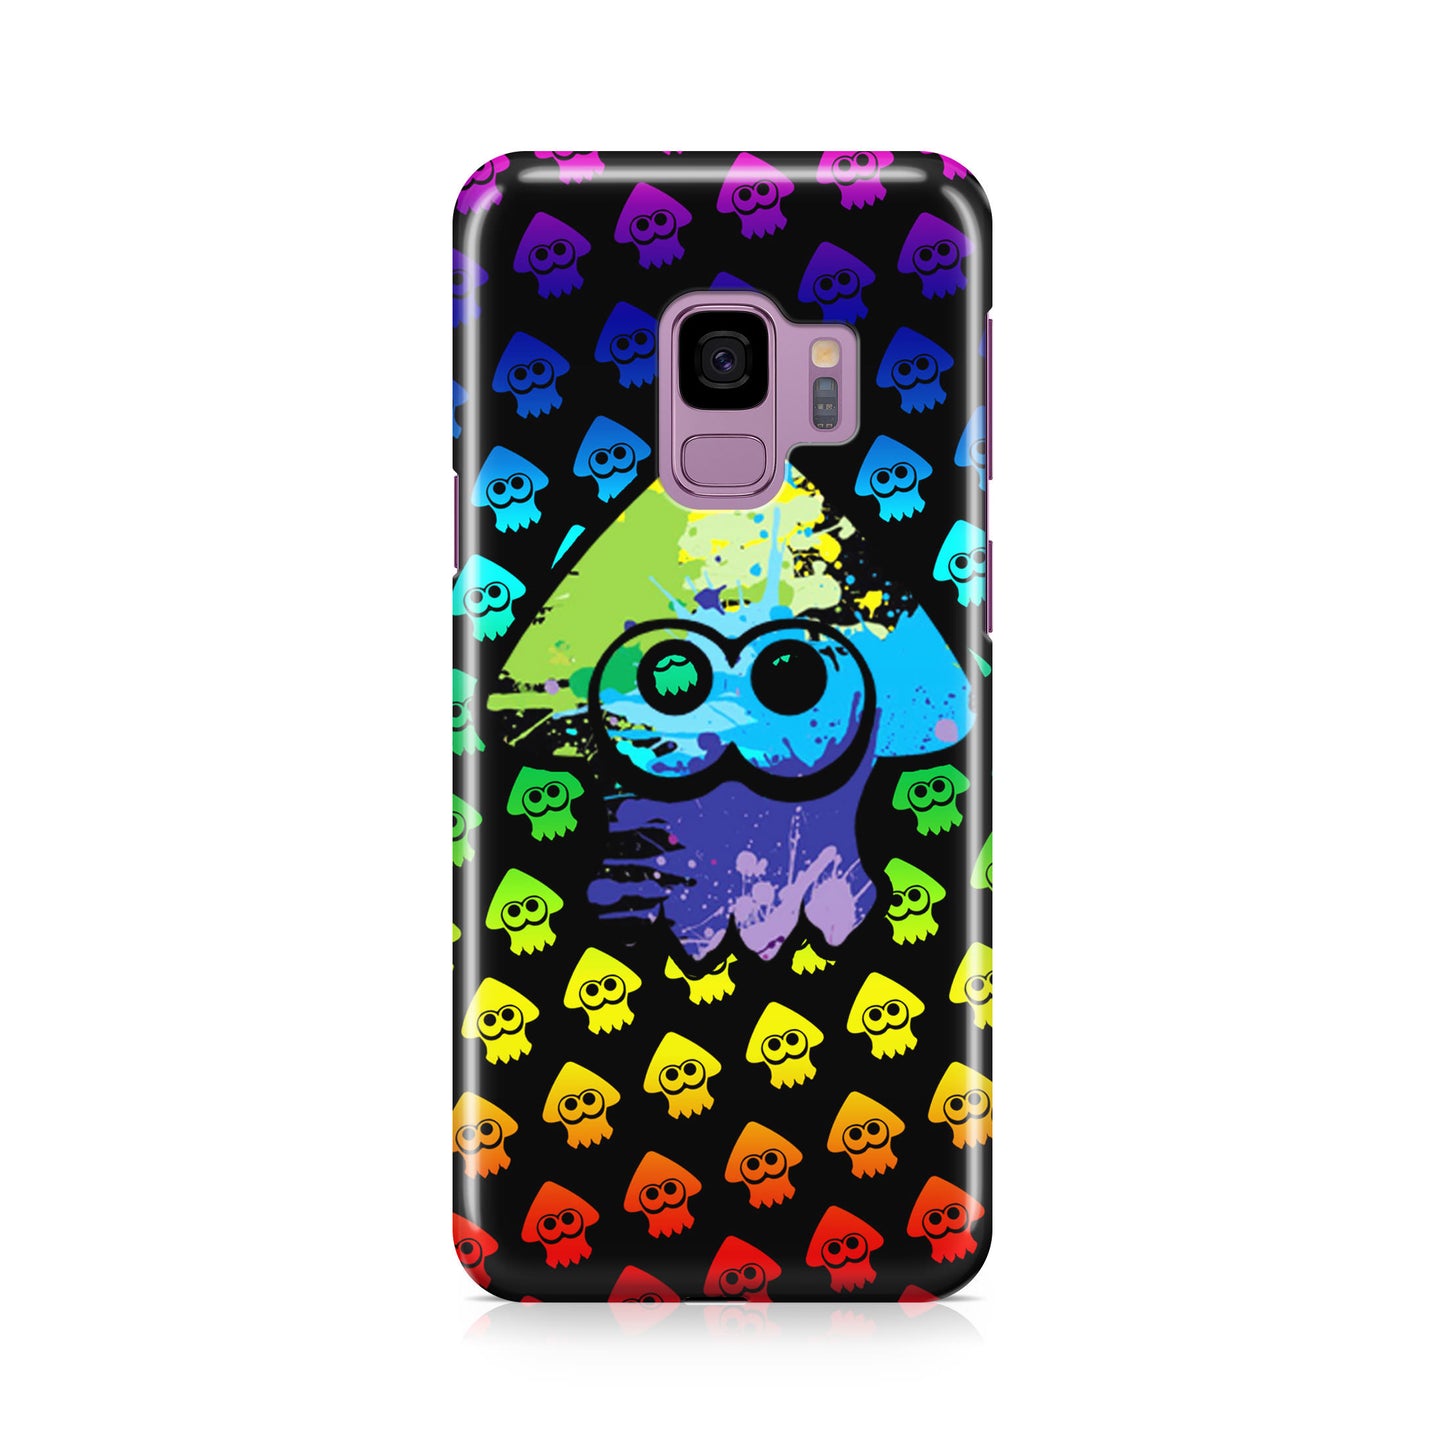 Splatoon Galaxy S9 Case